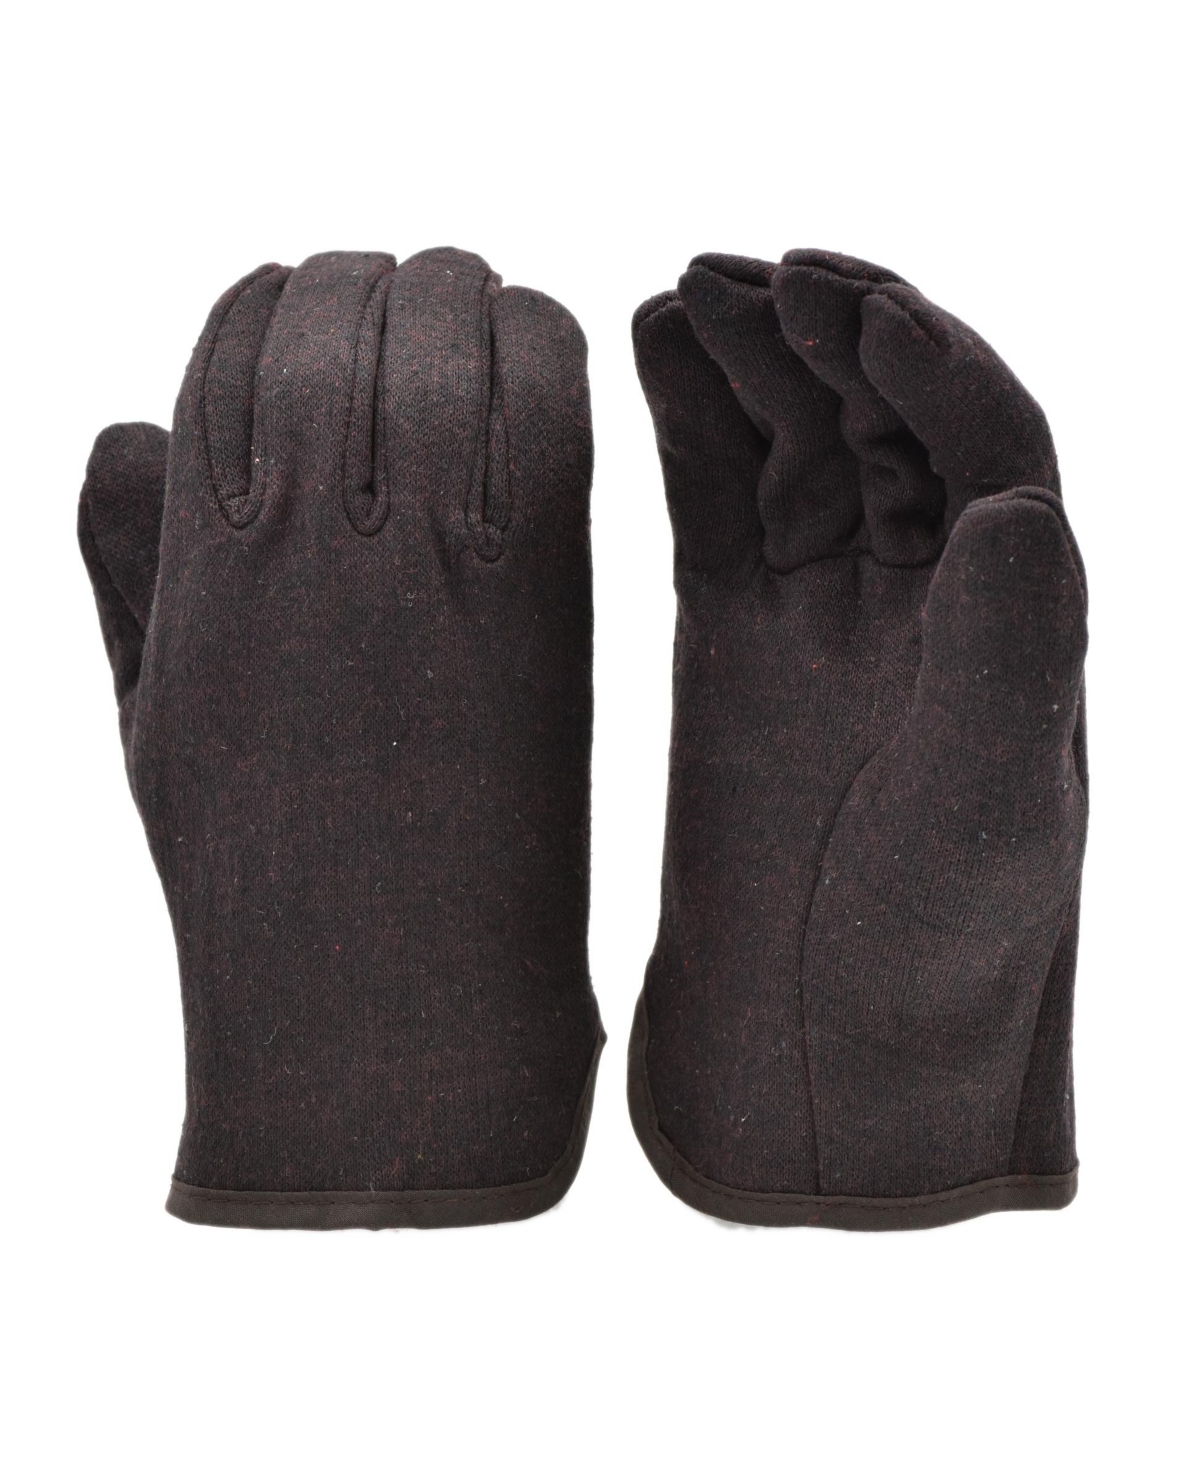 Brown Jersey Work Gloves w/ Fleece Lining, 12 pairs - Brown